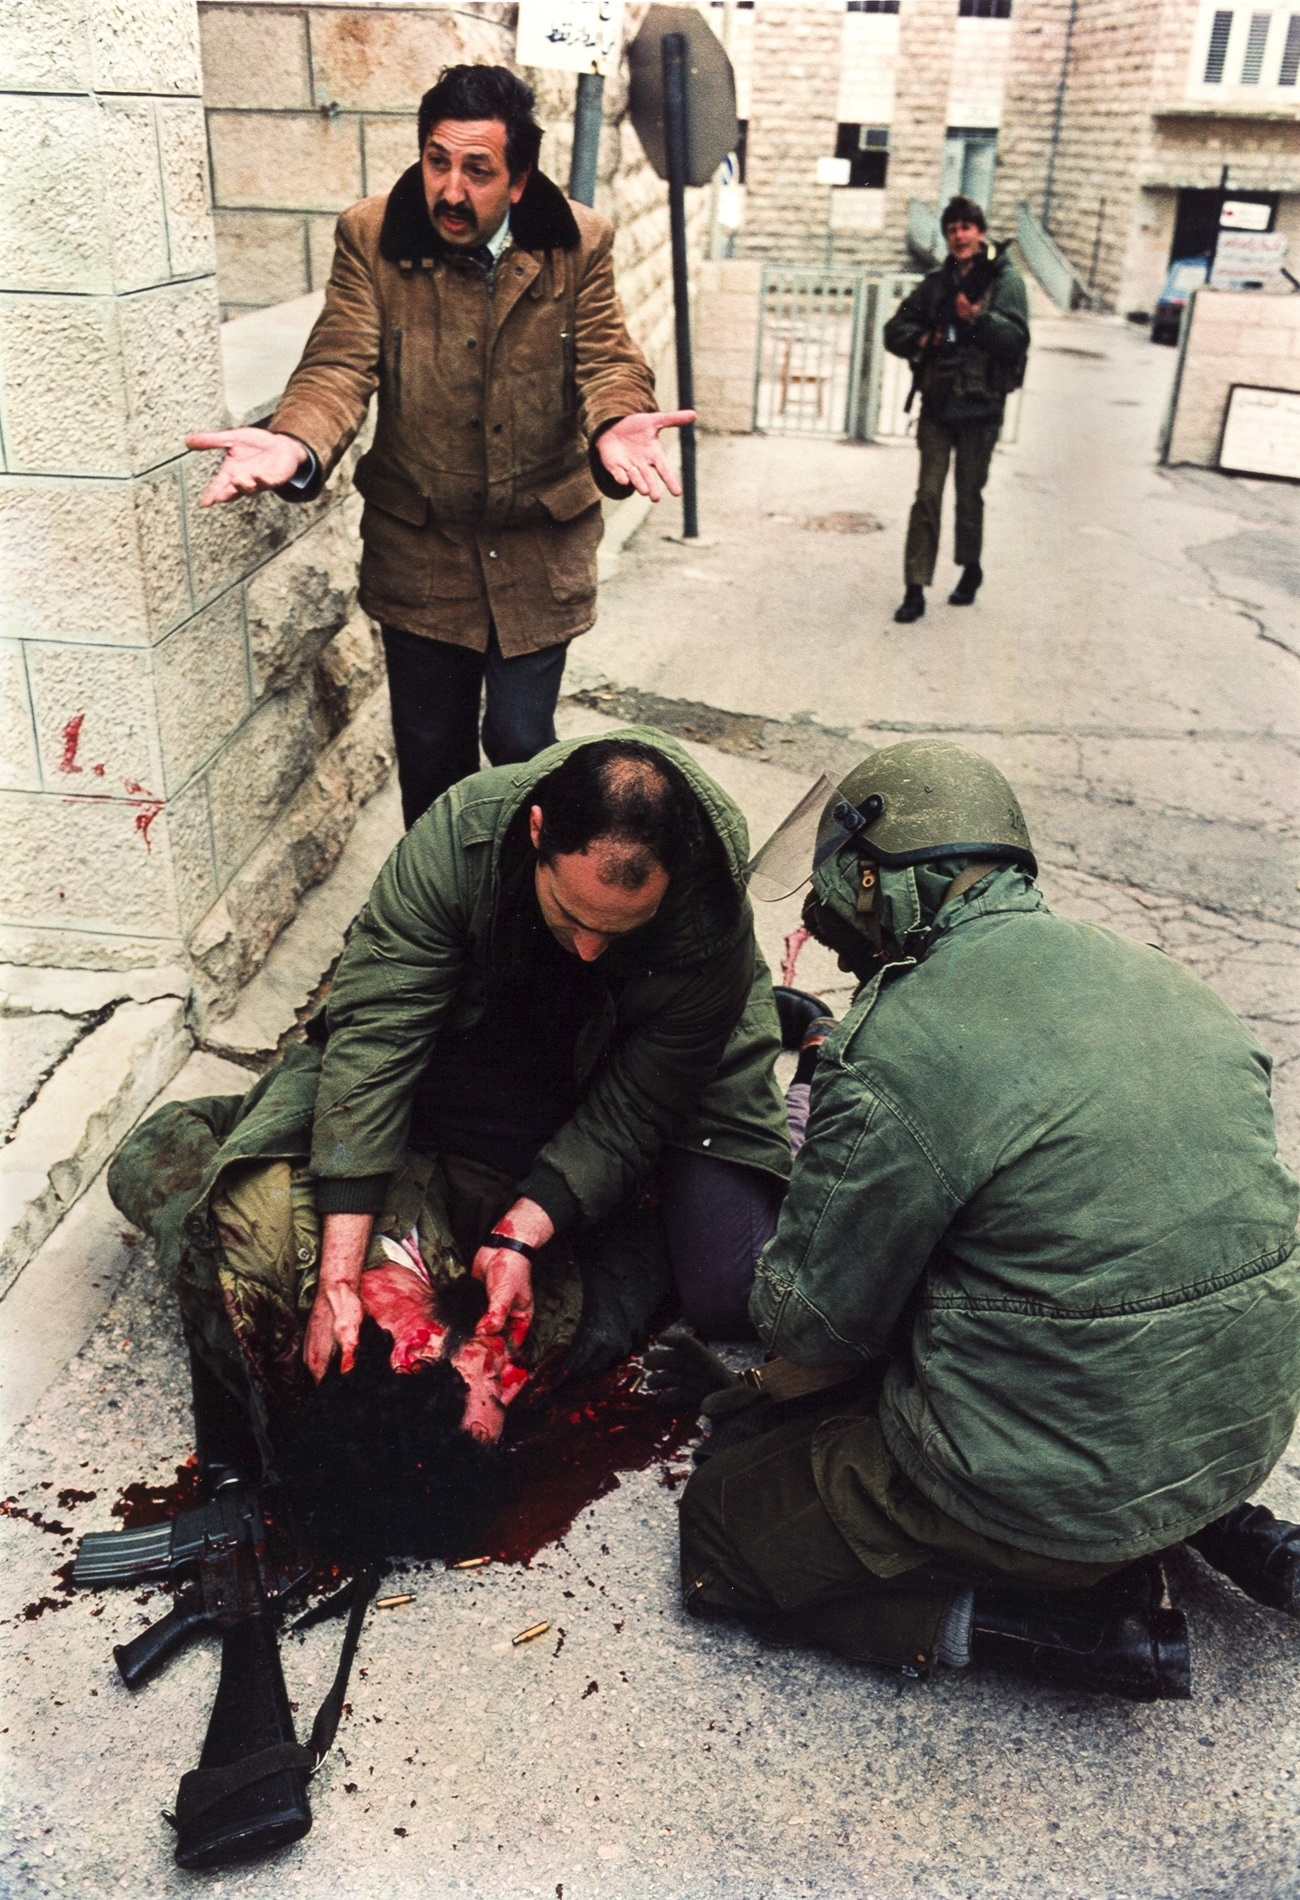 JAMES NACHTWEY (*1948)
An Israeli soldier shot by a Palestinian, Bethlehem, Israeli-occupied West Bank 1988 - James Nachtwey